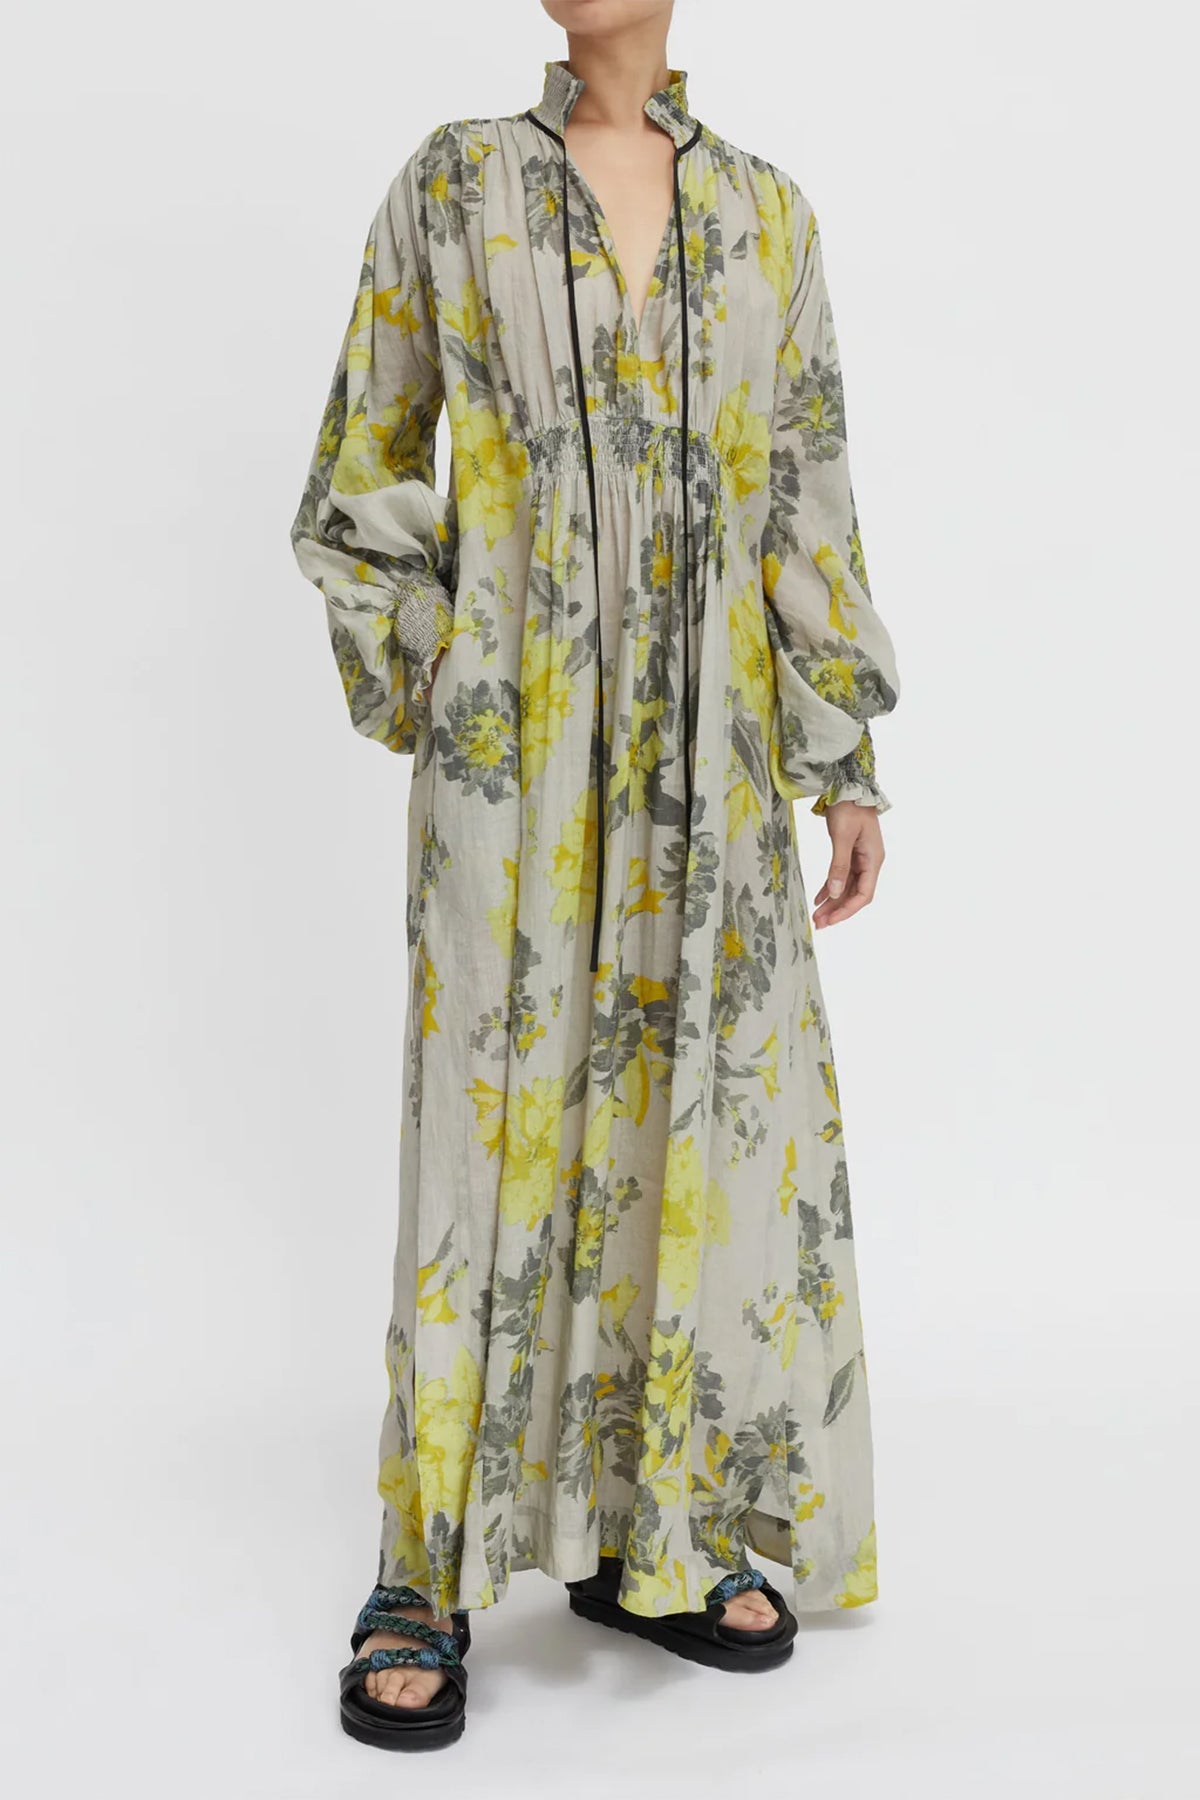 Lila Dress in Lemon - shop-olivia.com